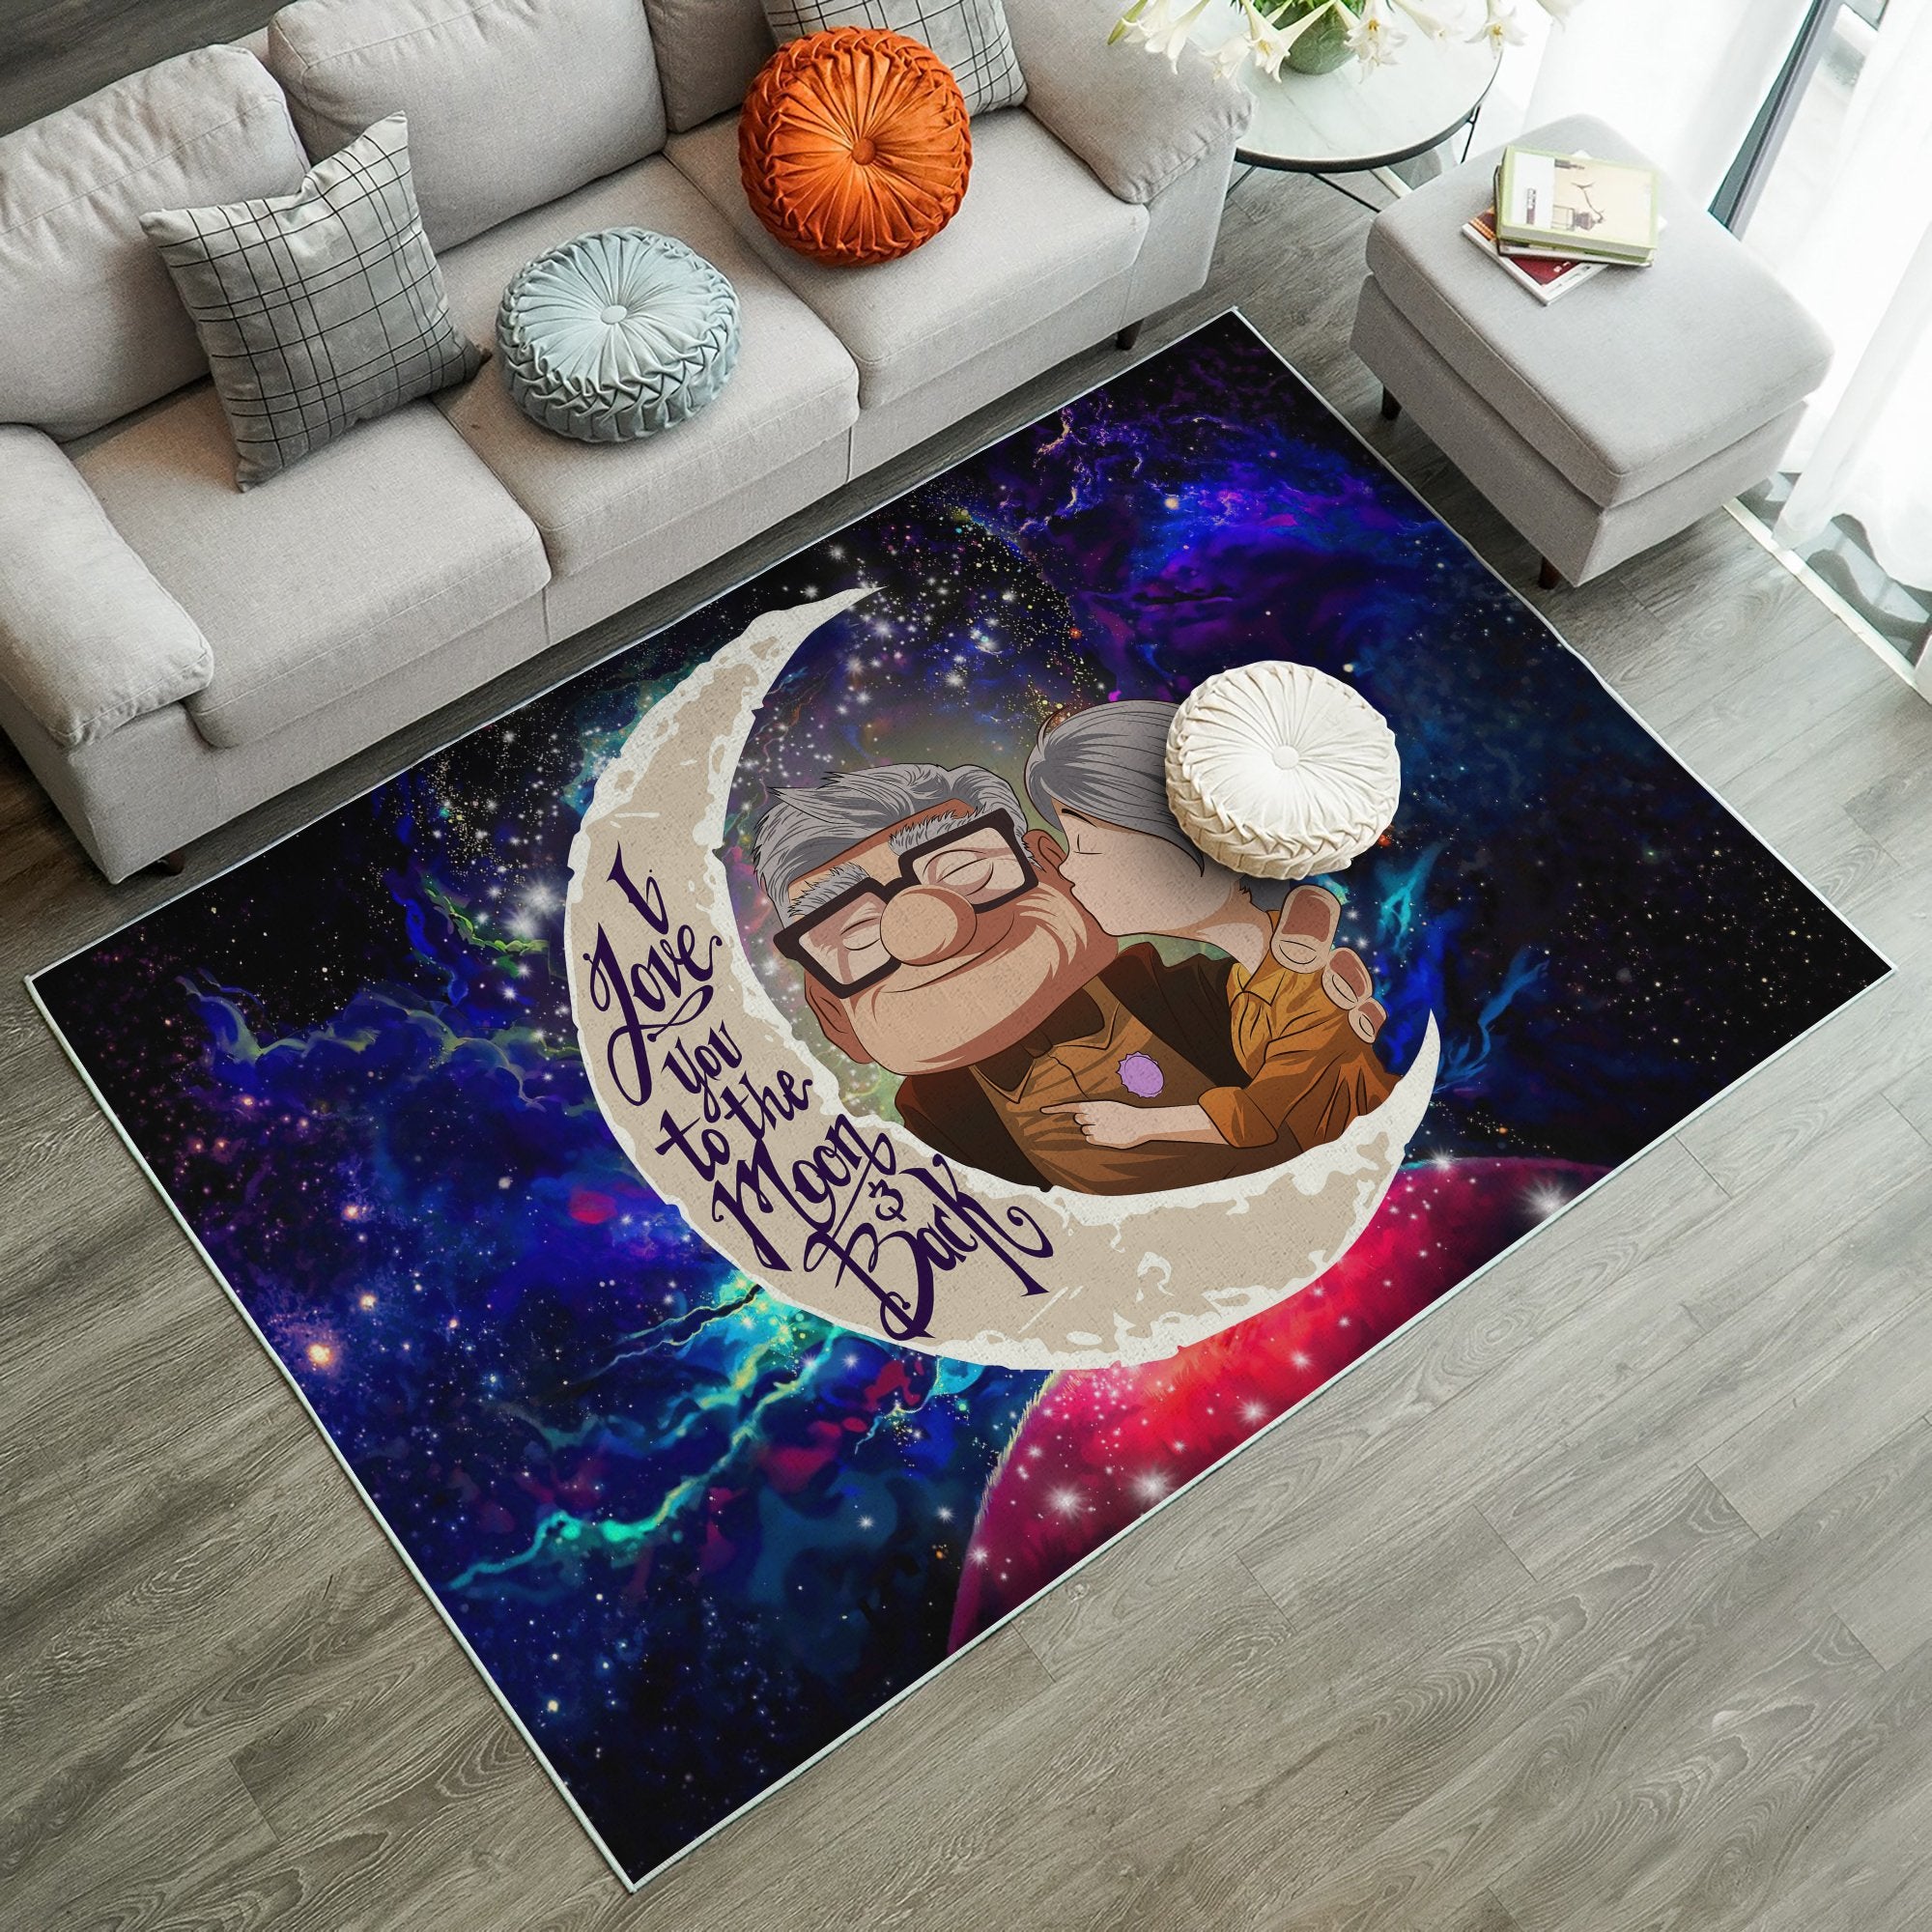 Up Couple Love You To The Moon Galaxy Carpet Rug Home Room Decor Nearkii